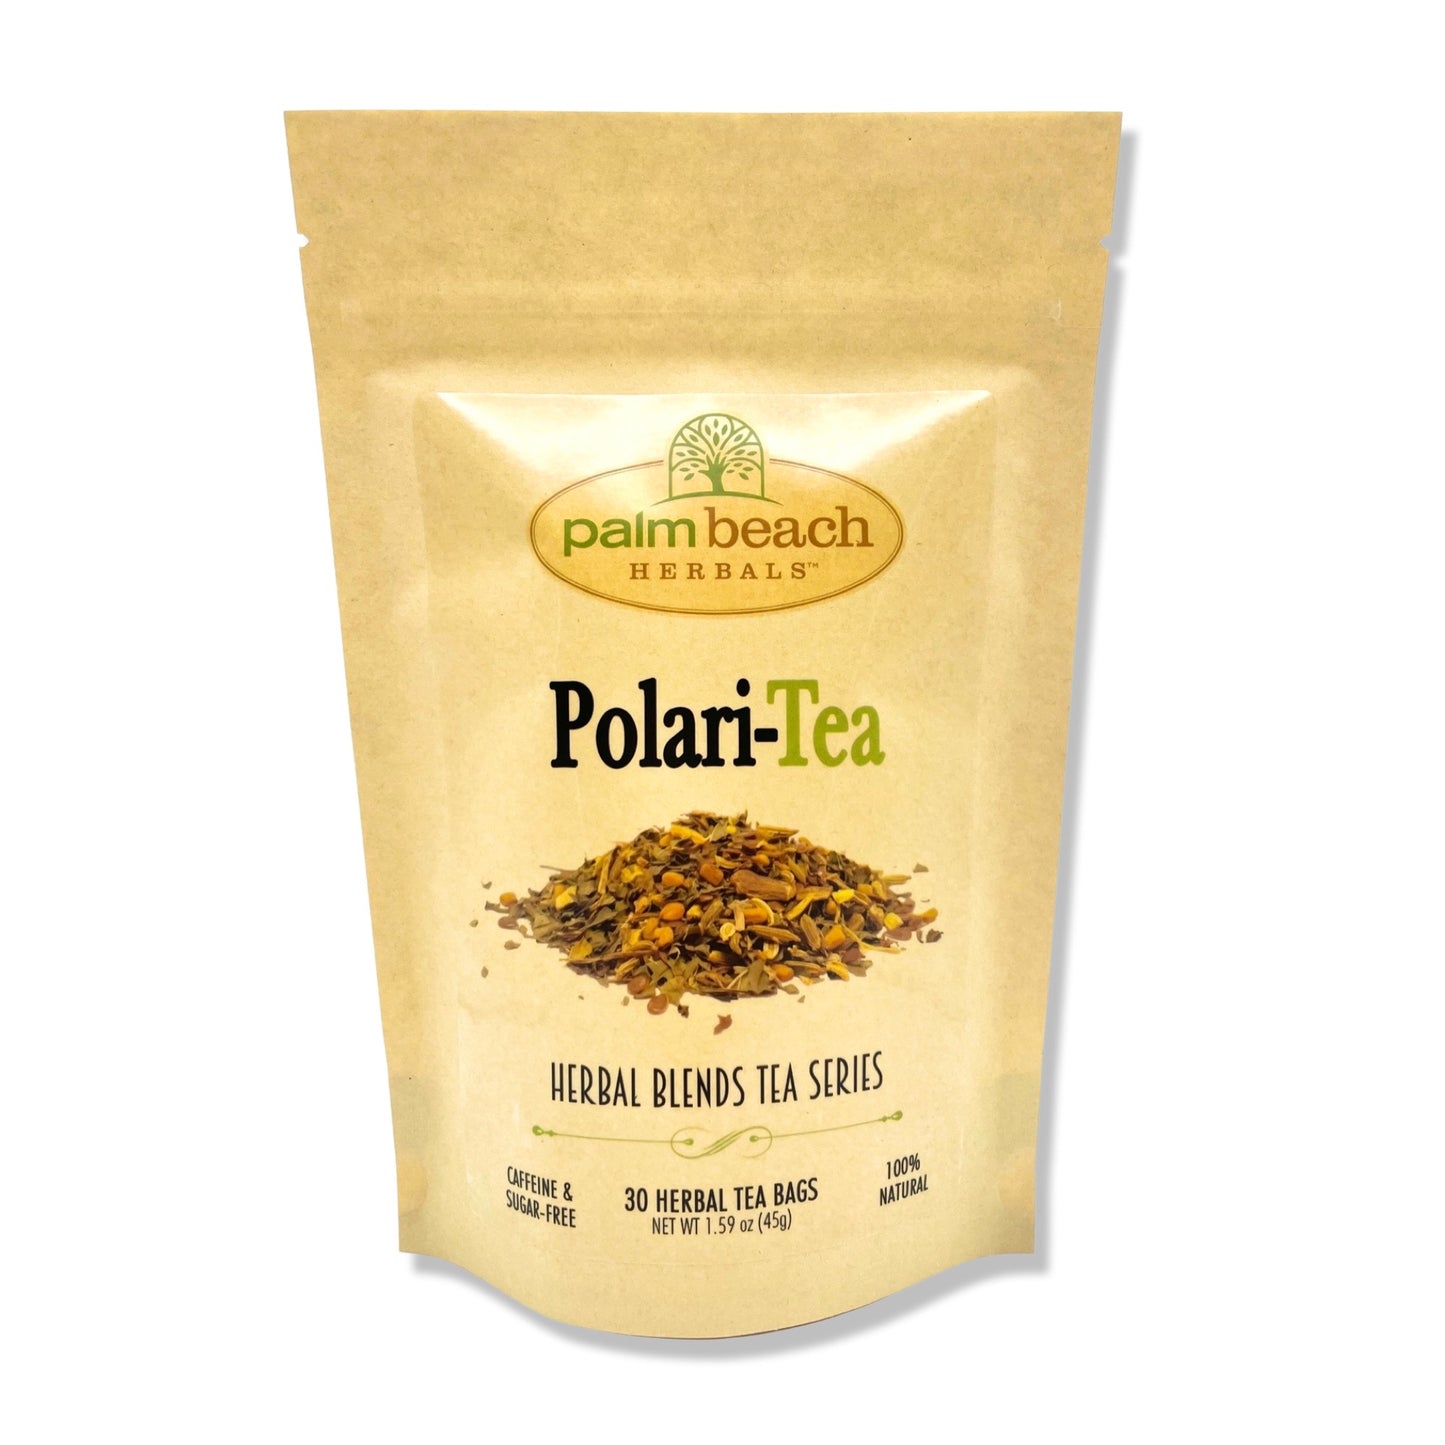 Polari-tea Blend Herbal Tea